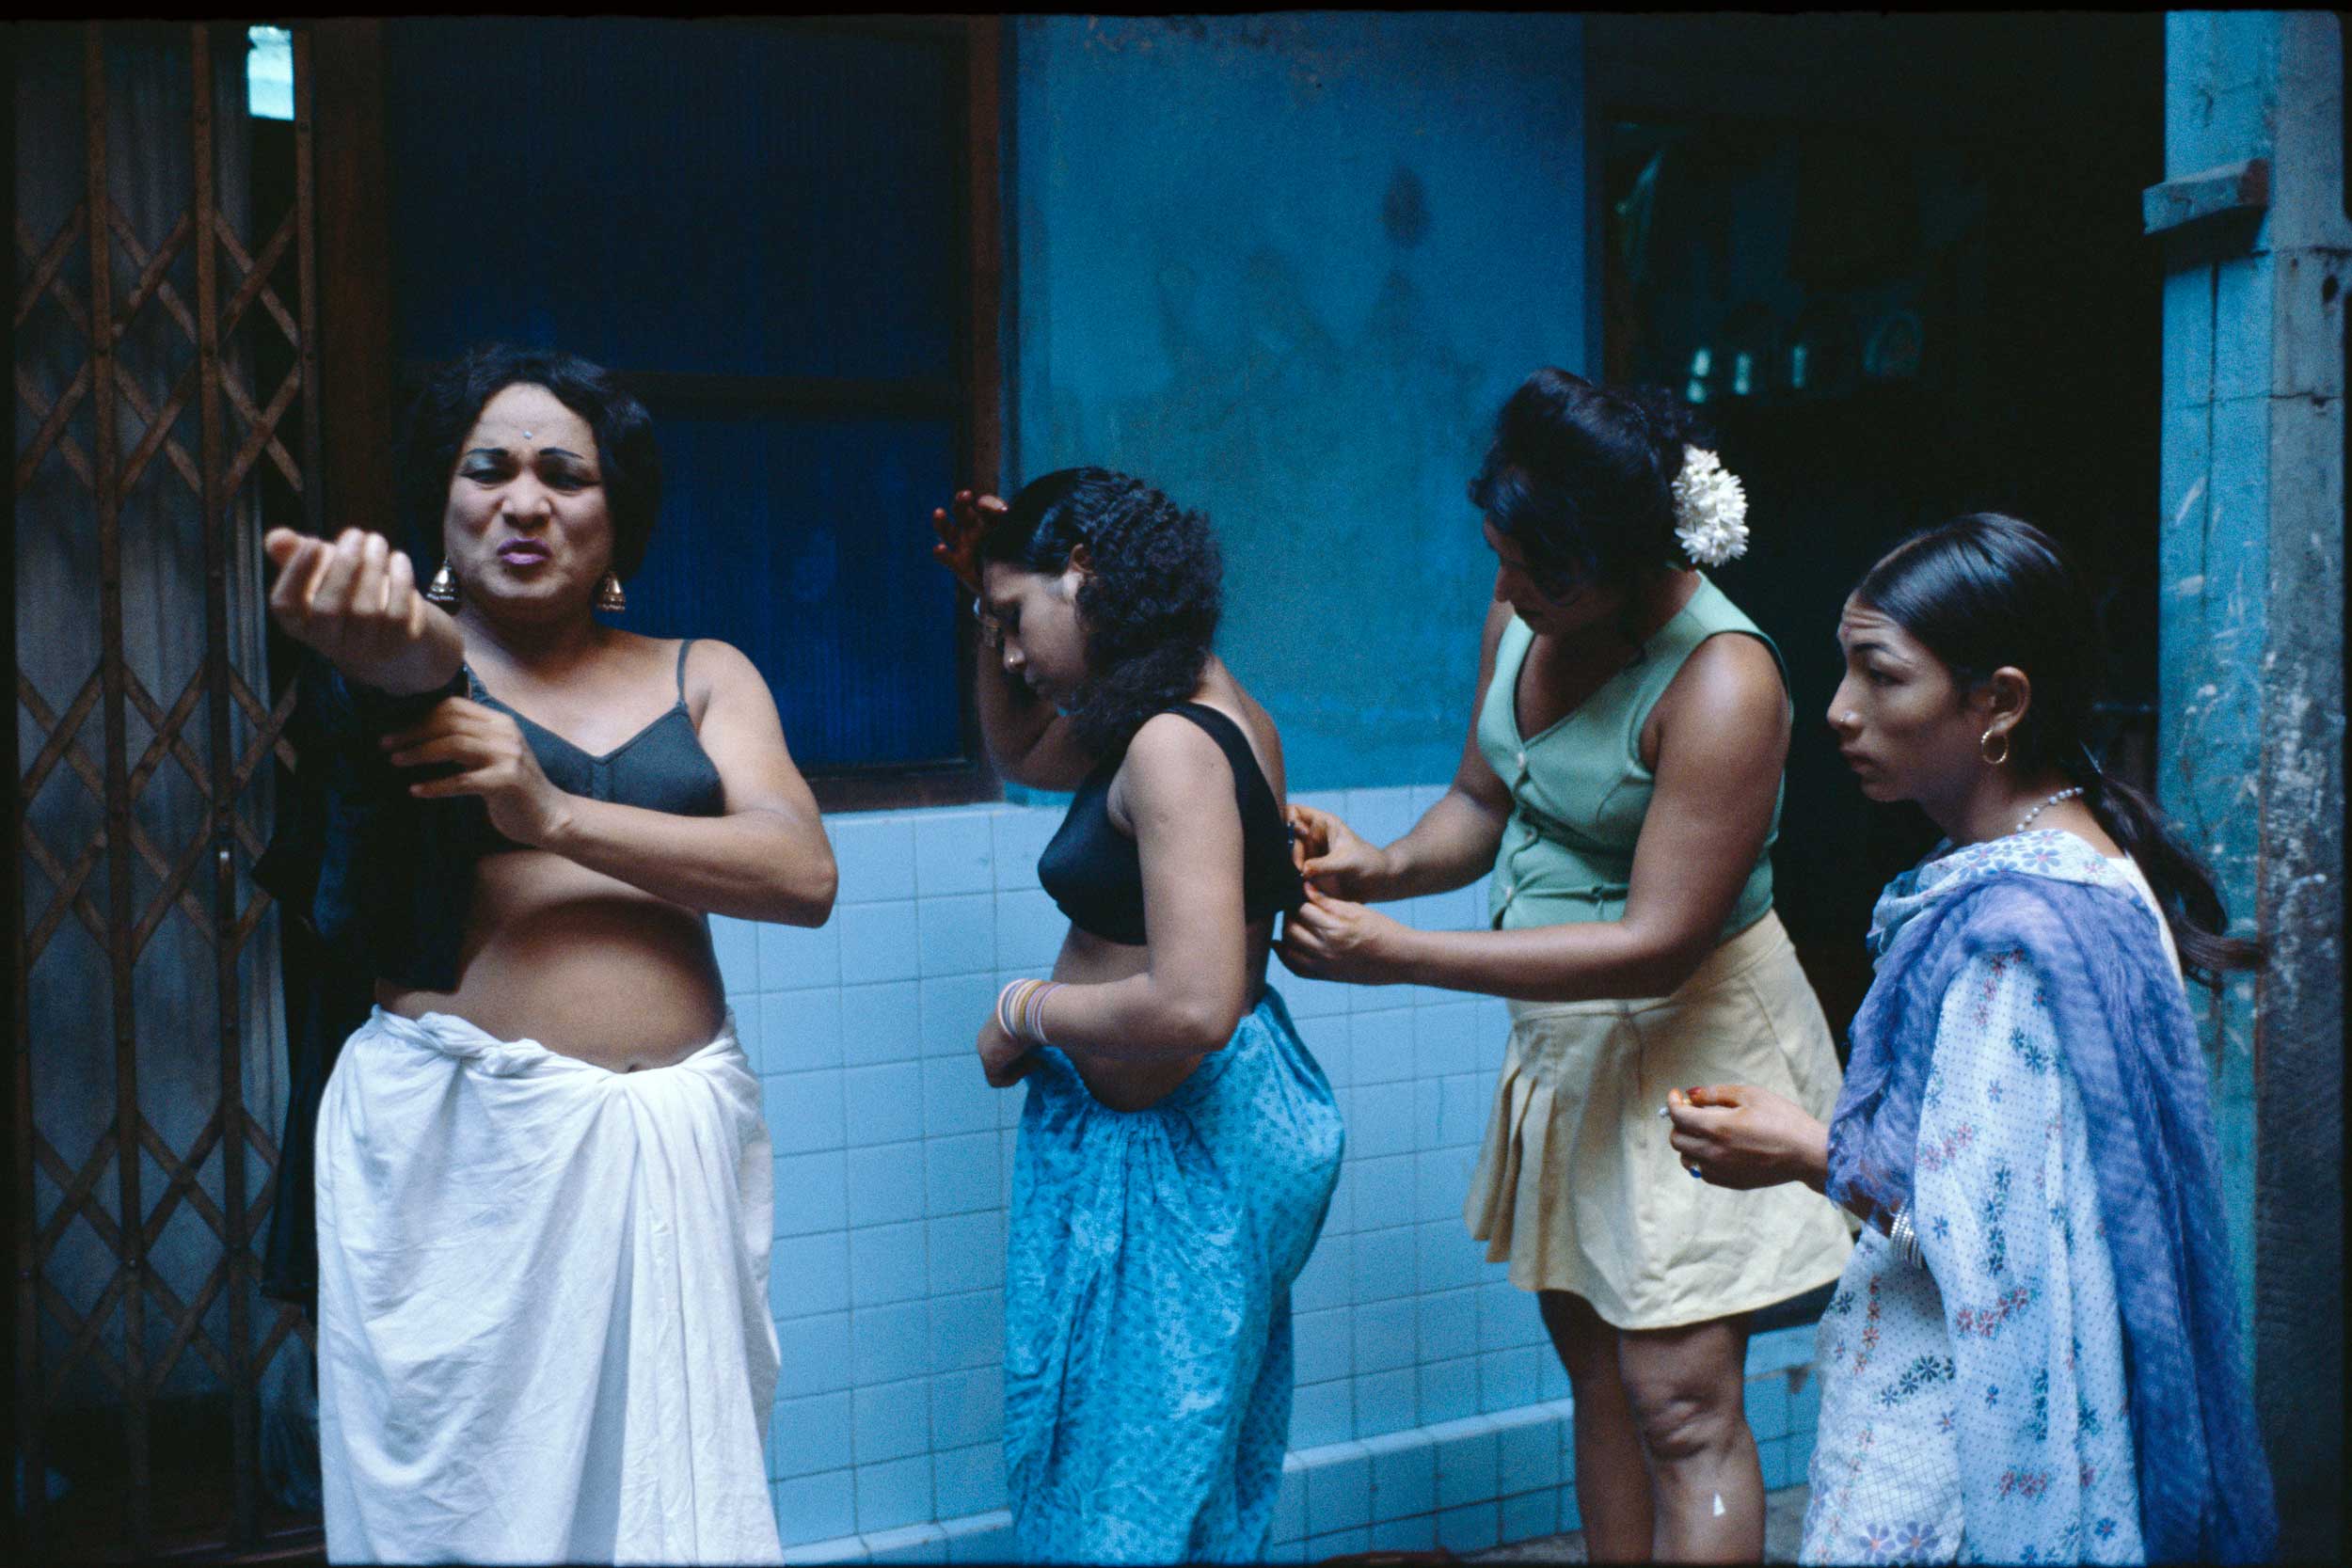 Transvestites getting dressed in a courtyard. 1978. (Mary Ellen Mark)